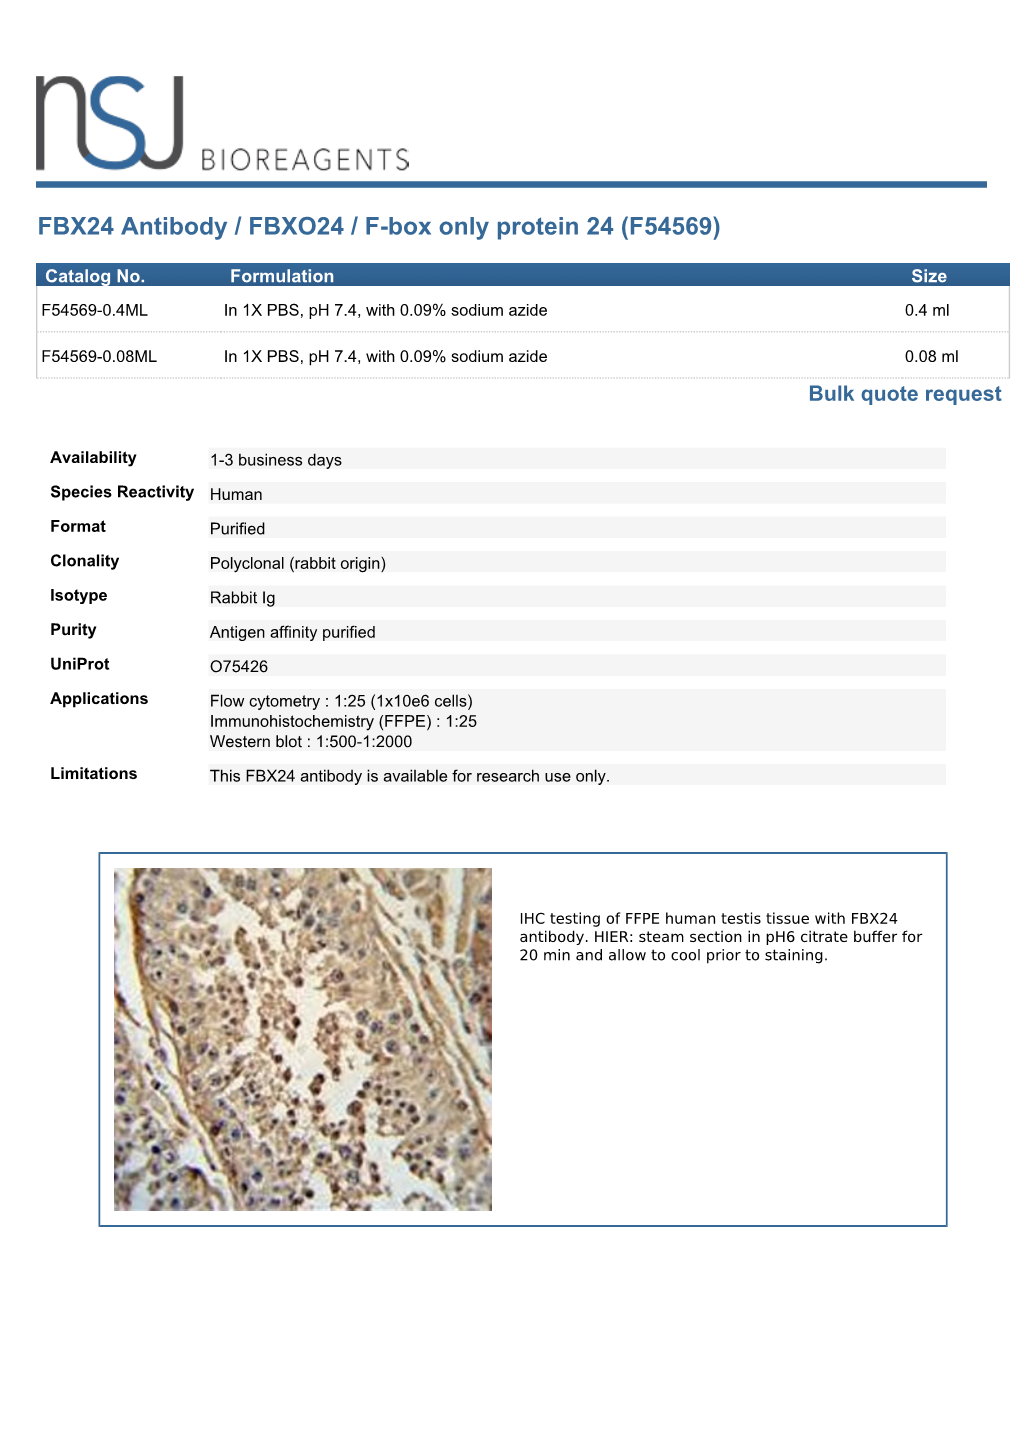 FBXO24 Antibody (F54569)